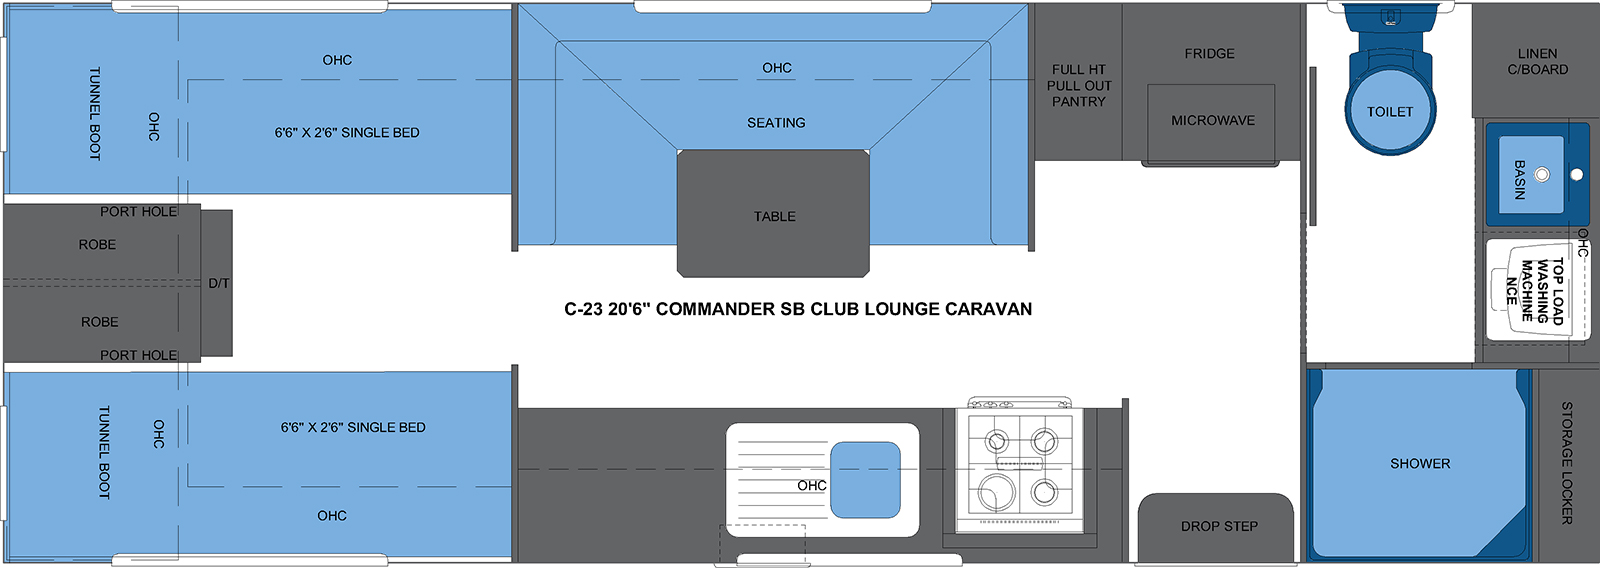 C-23 20'6 COMMANDER SB CLUB LOUNGE CARAVAN